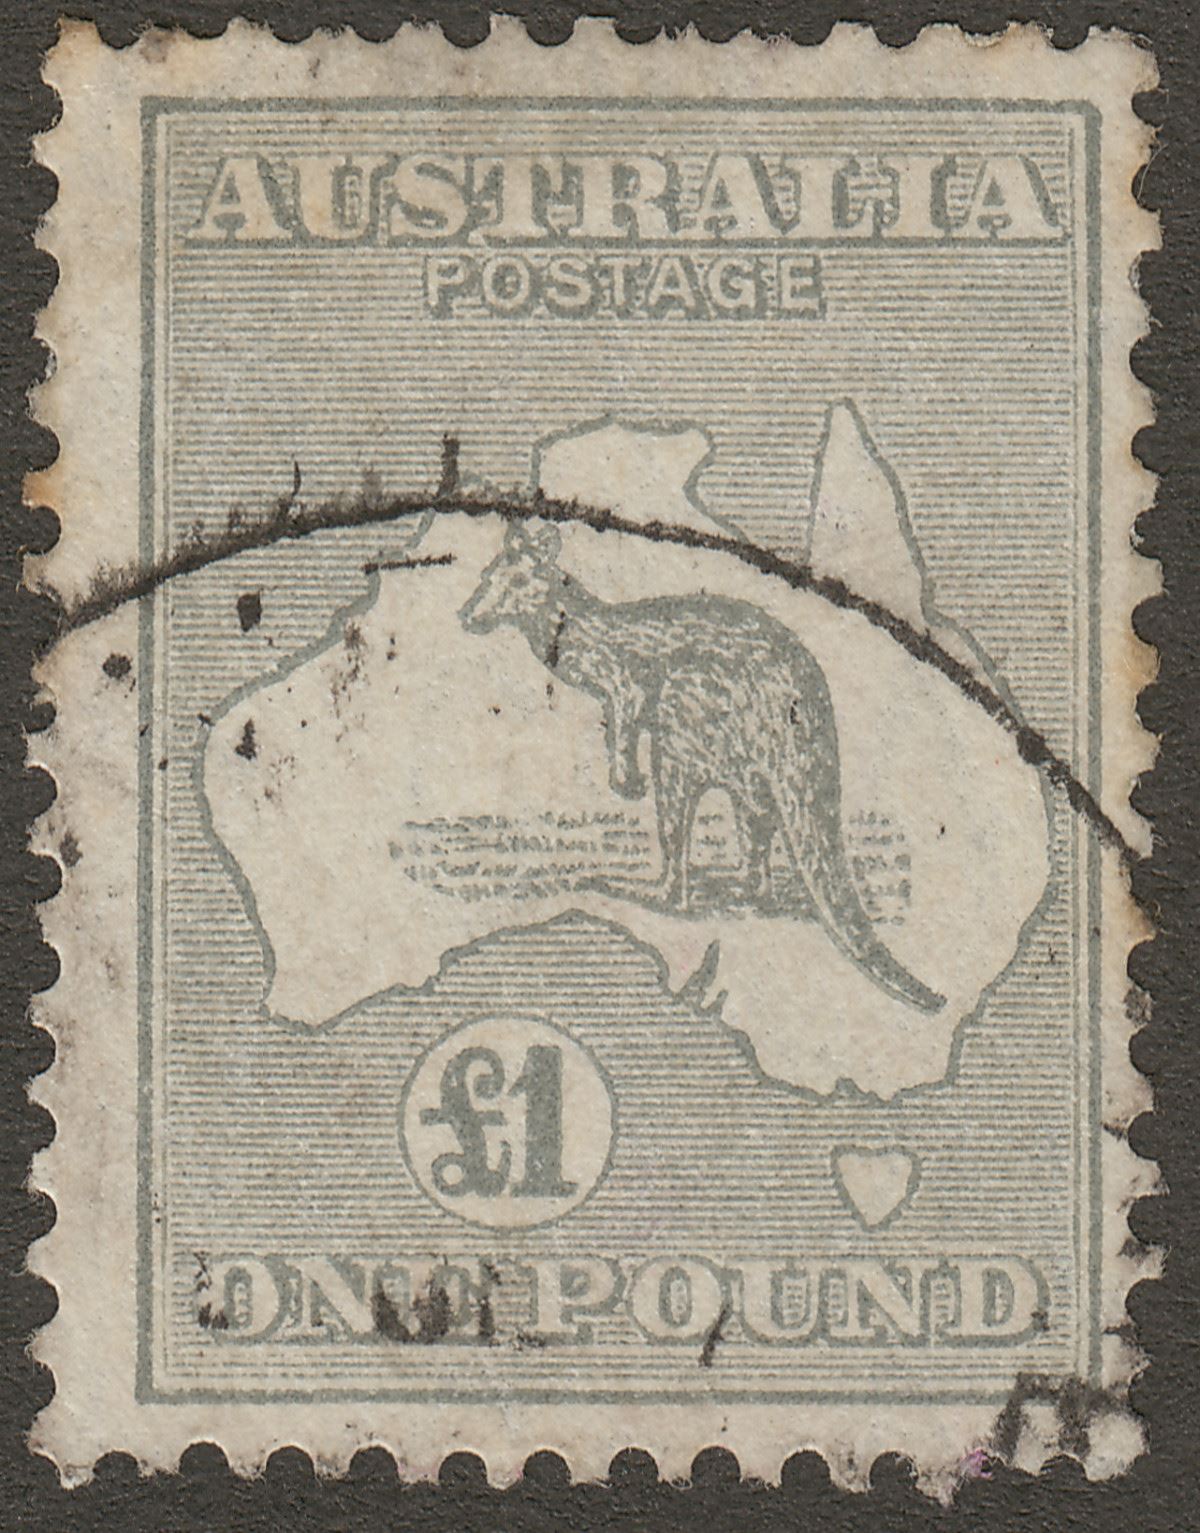 Australia 1935 KGV Roo £1 Grey wmk CofA Used SG137 cat £275 w small faults